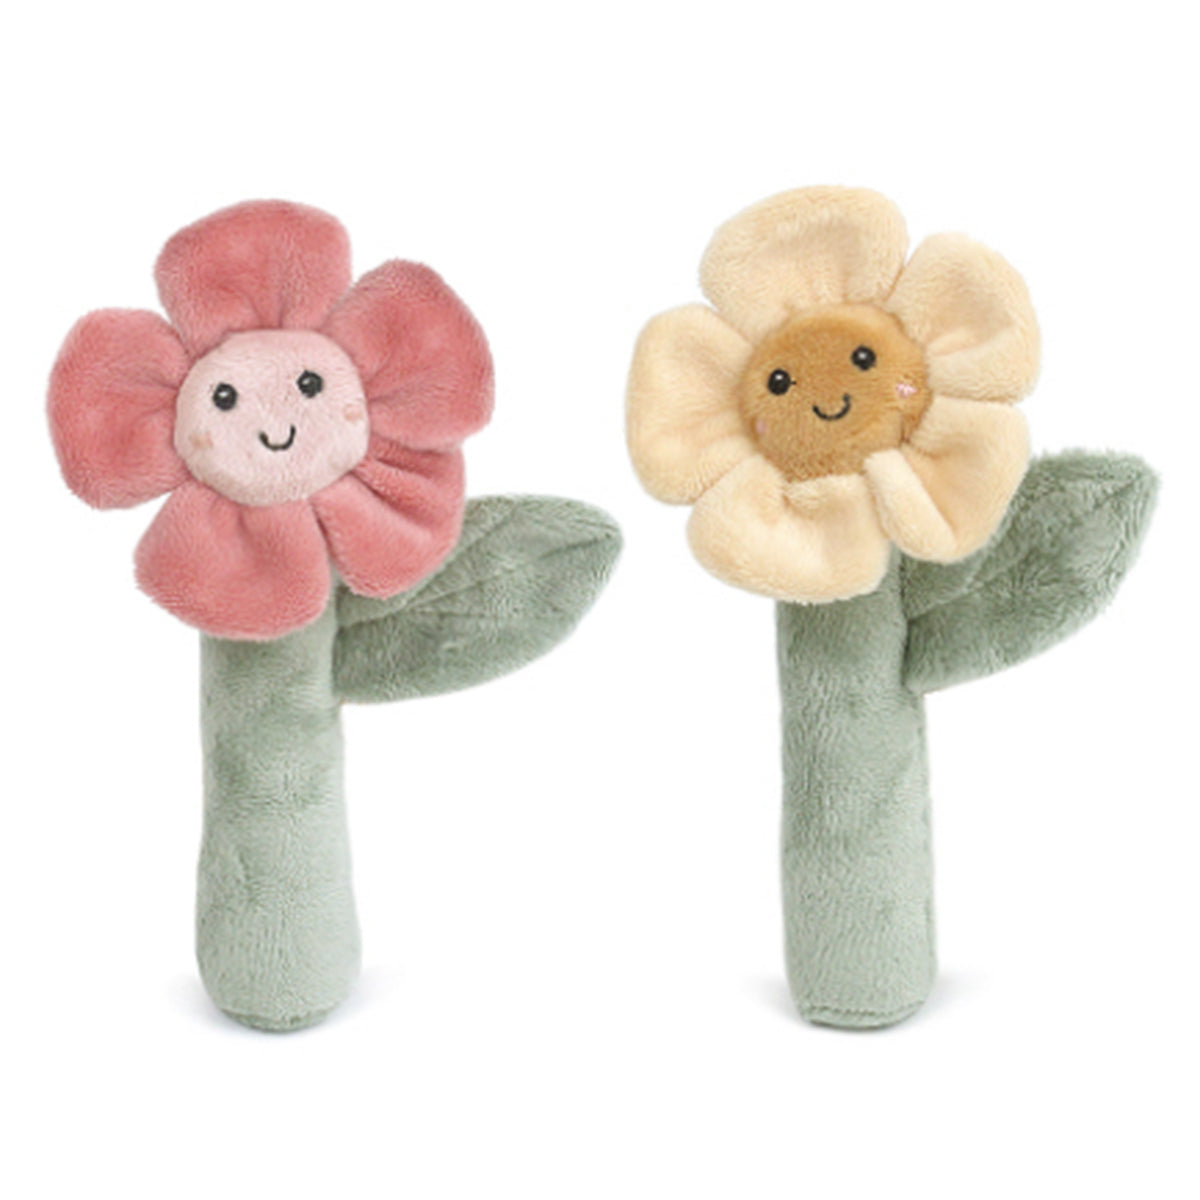 Mon Ami Flower Baby Rattle Set